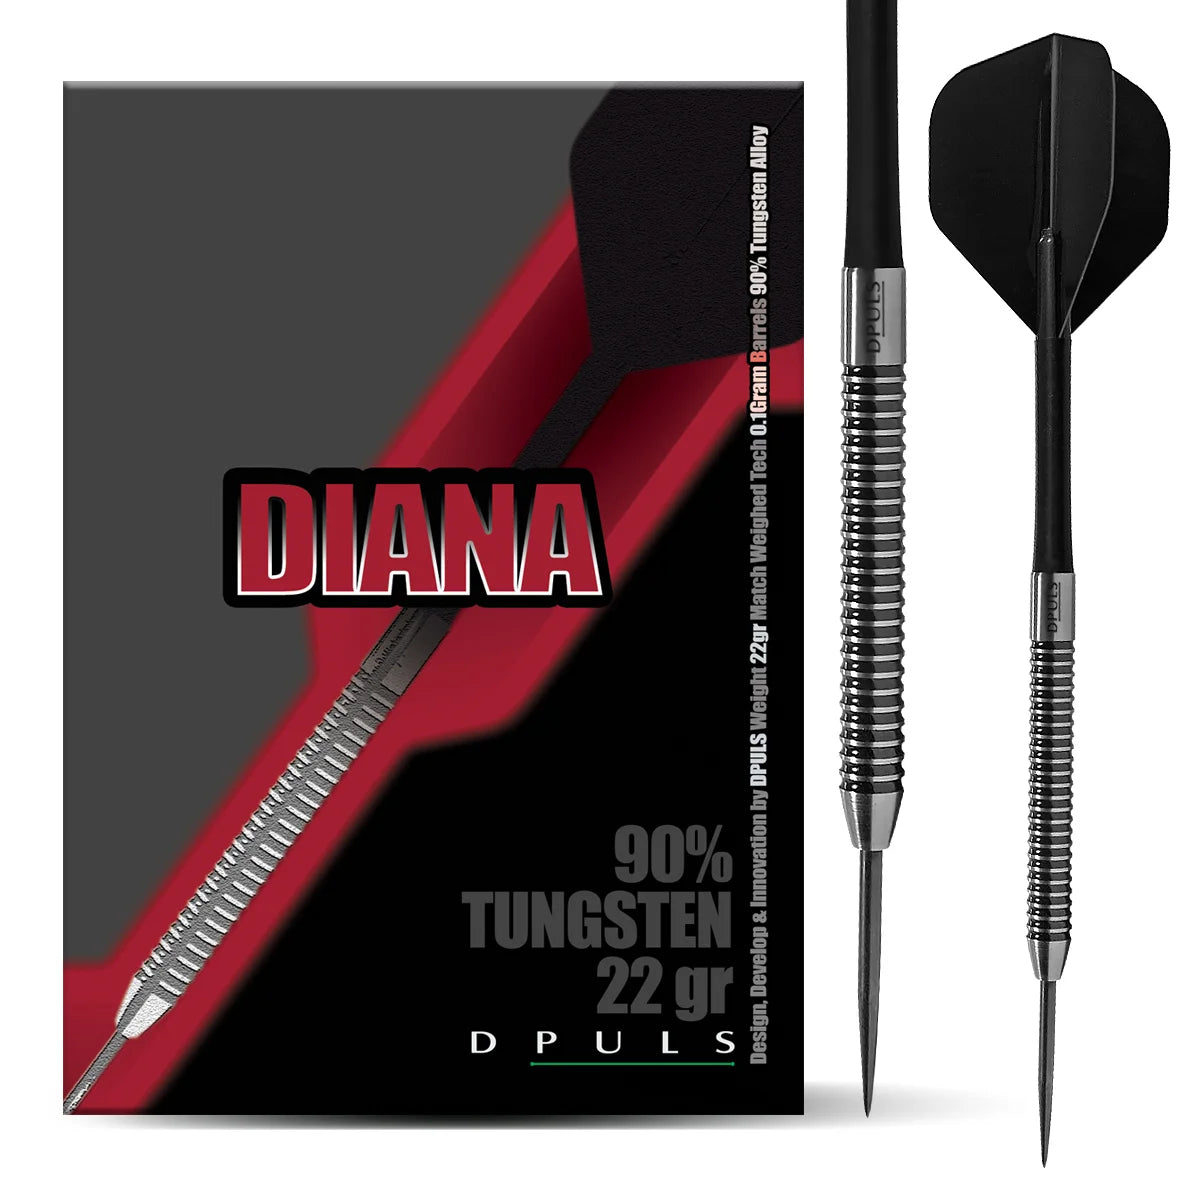 DPULS Diana Steel Darts 22g/90%